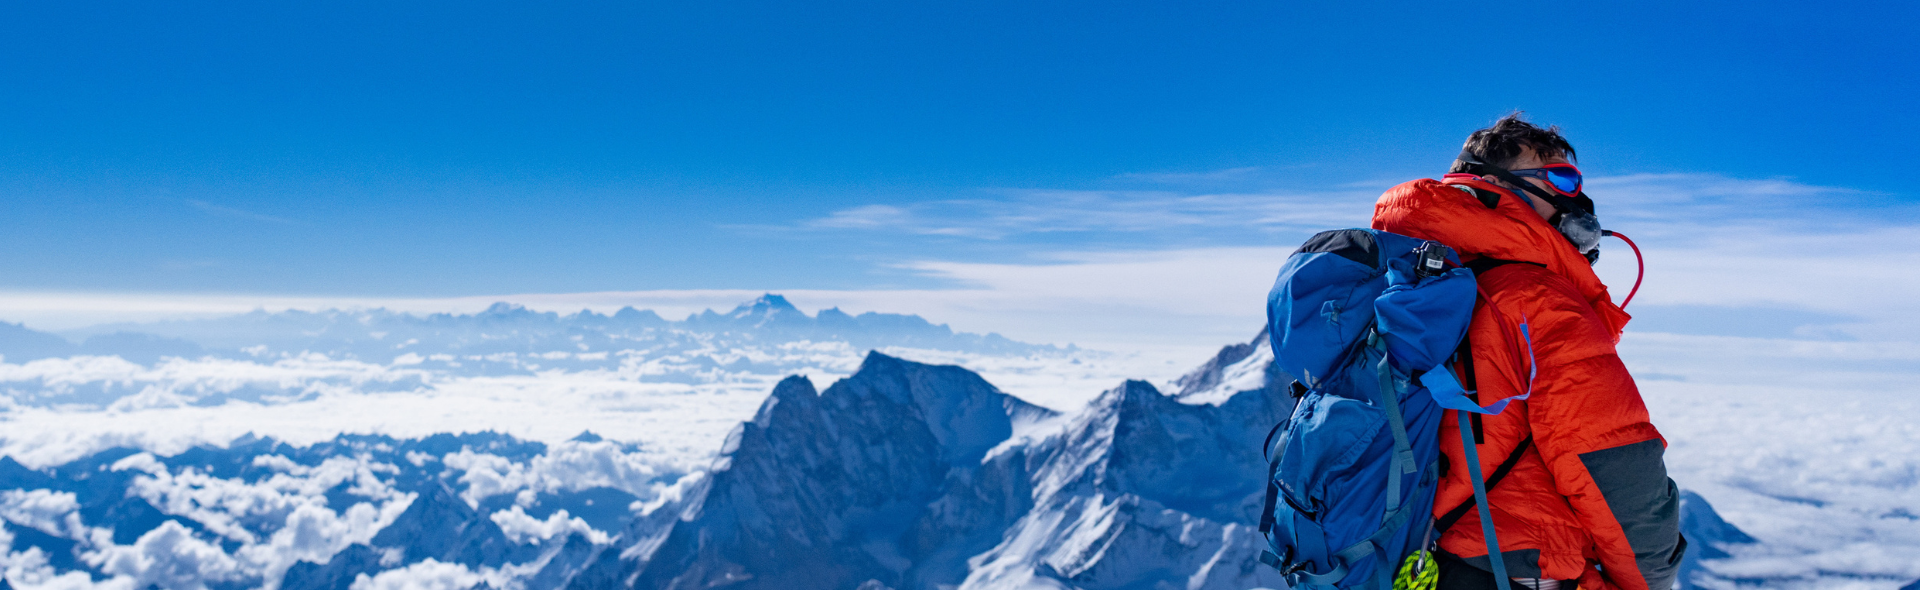 Kenton Cool - Everest: The Untold Story